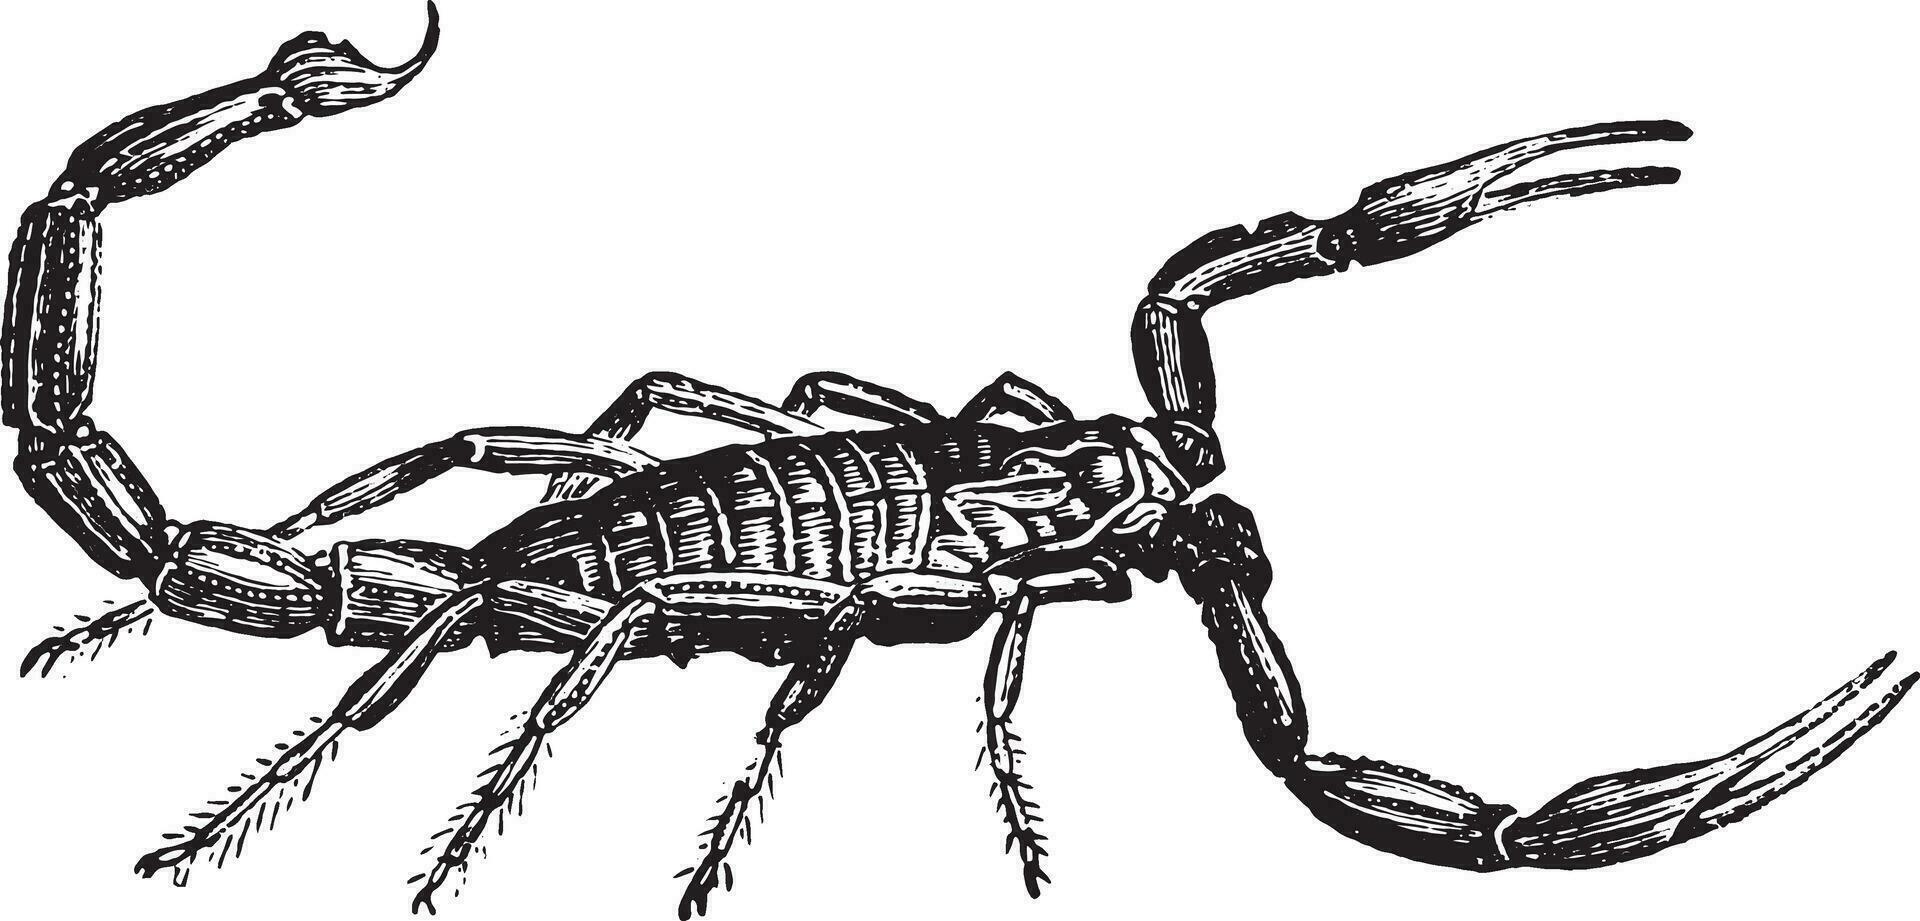 Scorpion, vintage engraving. vector